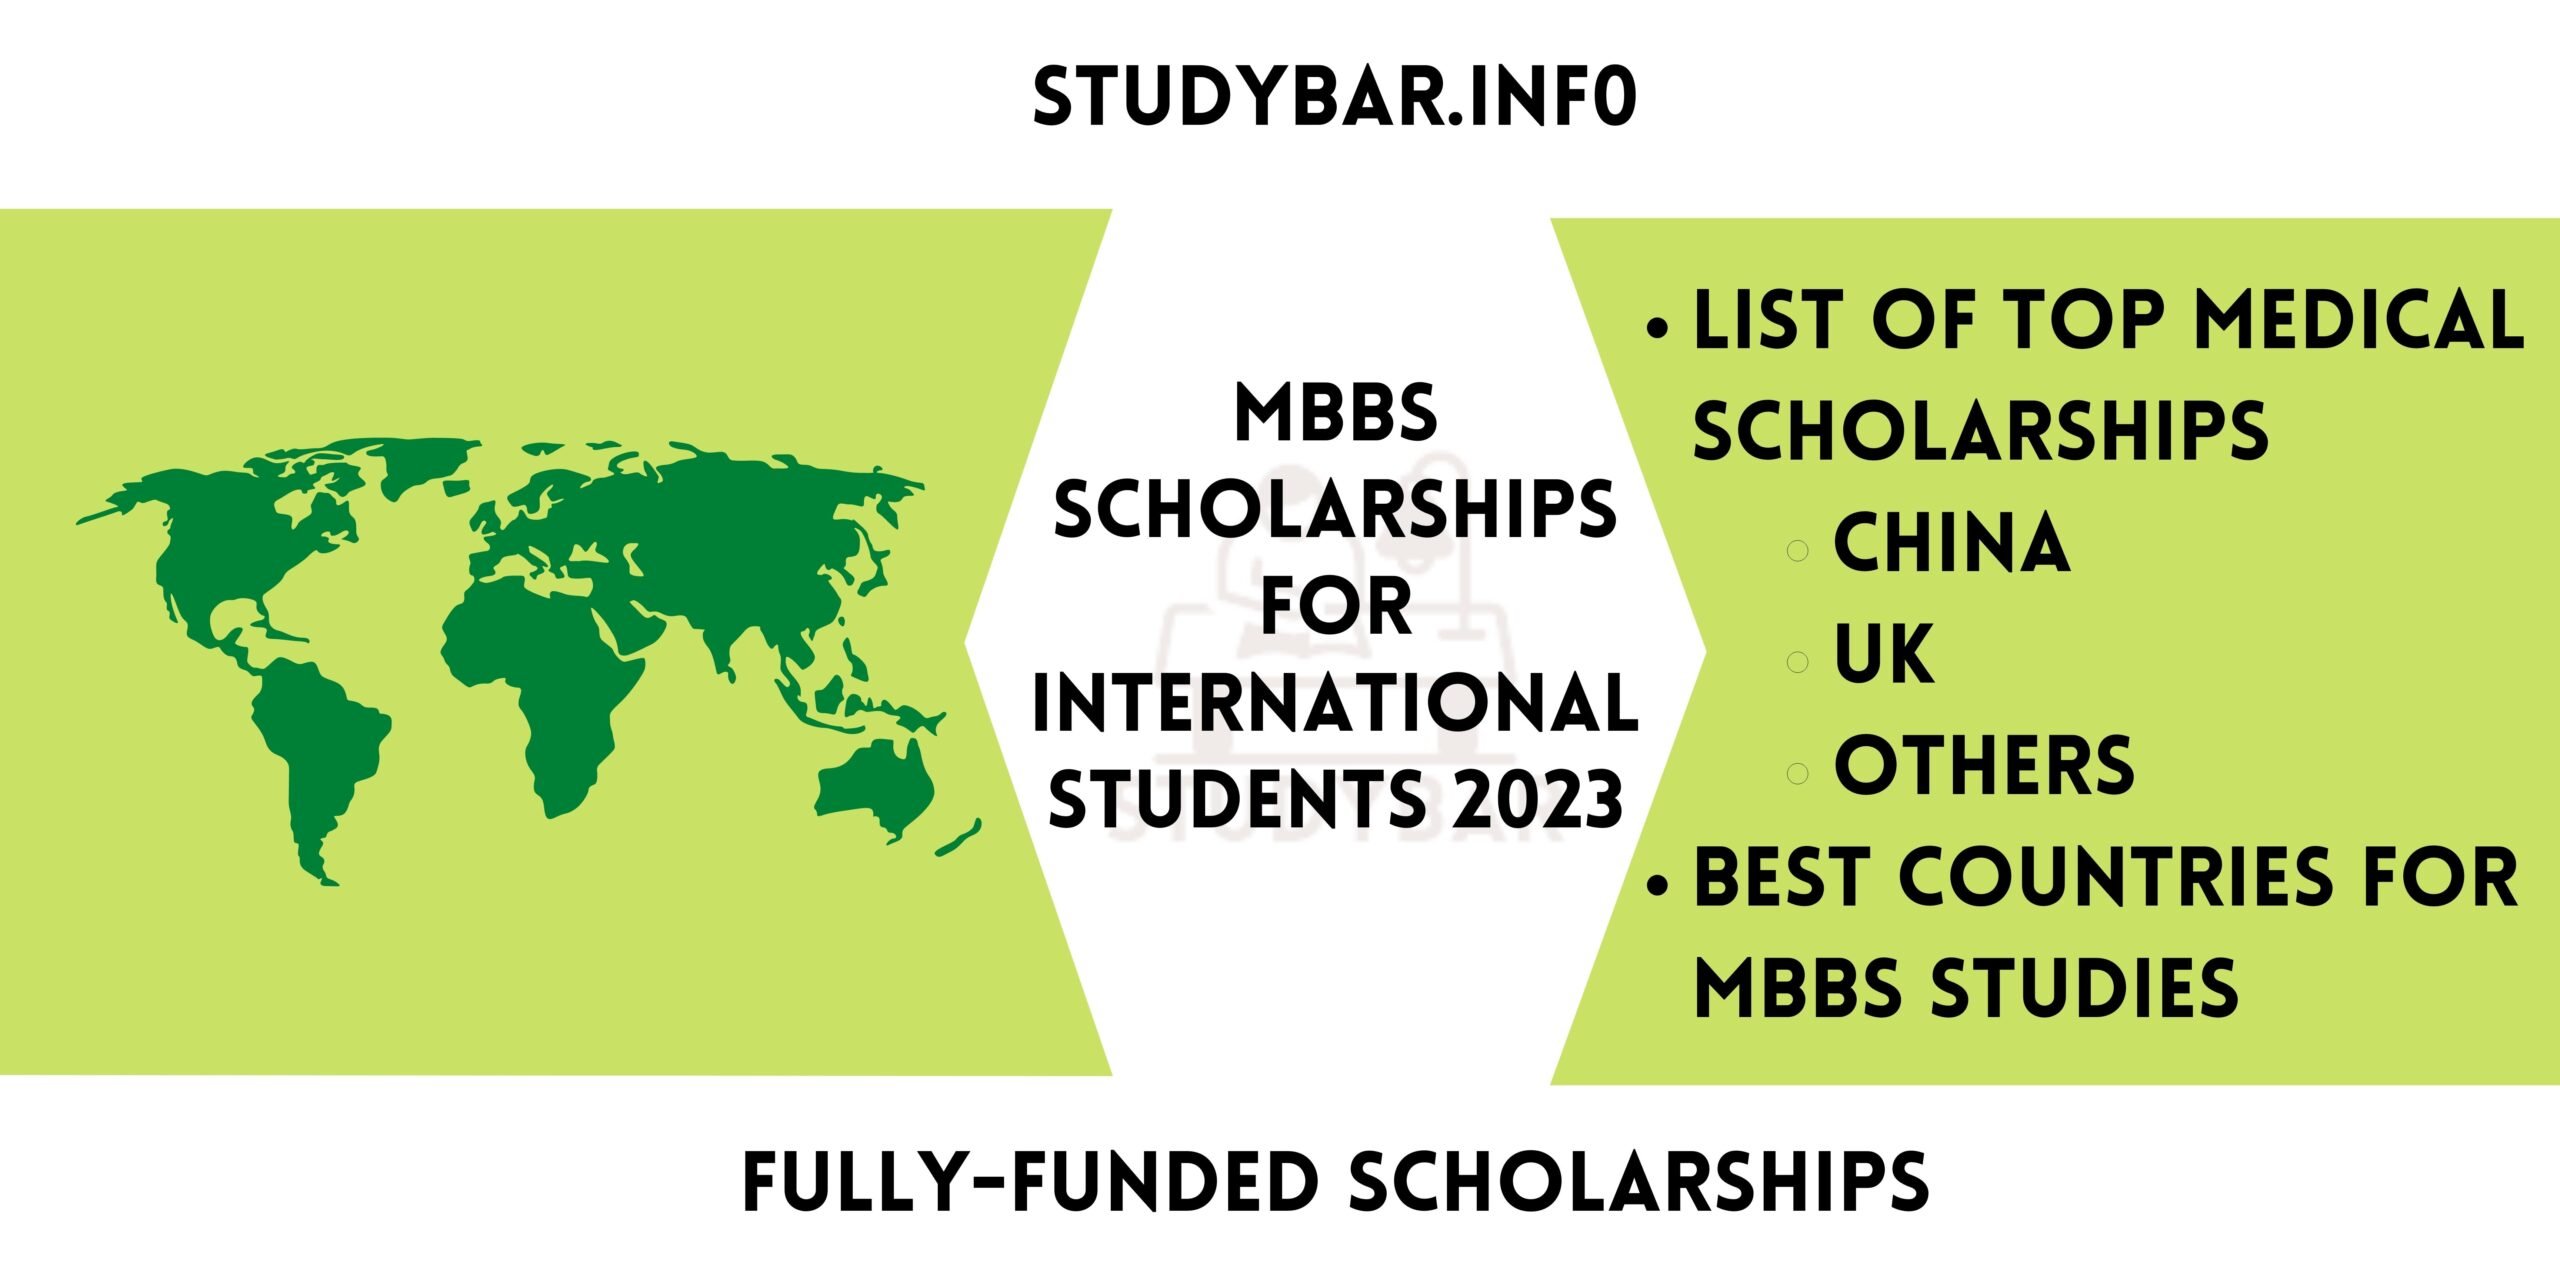 MBBS Scholarships for International Students 2023